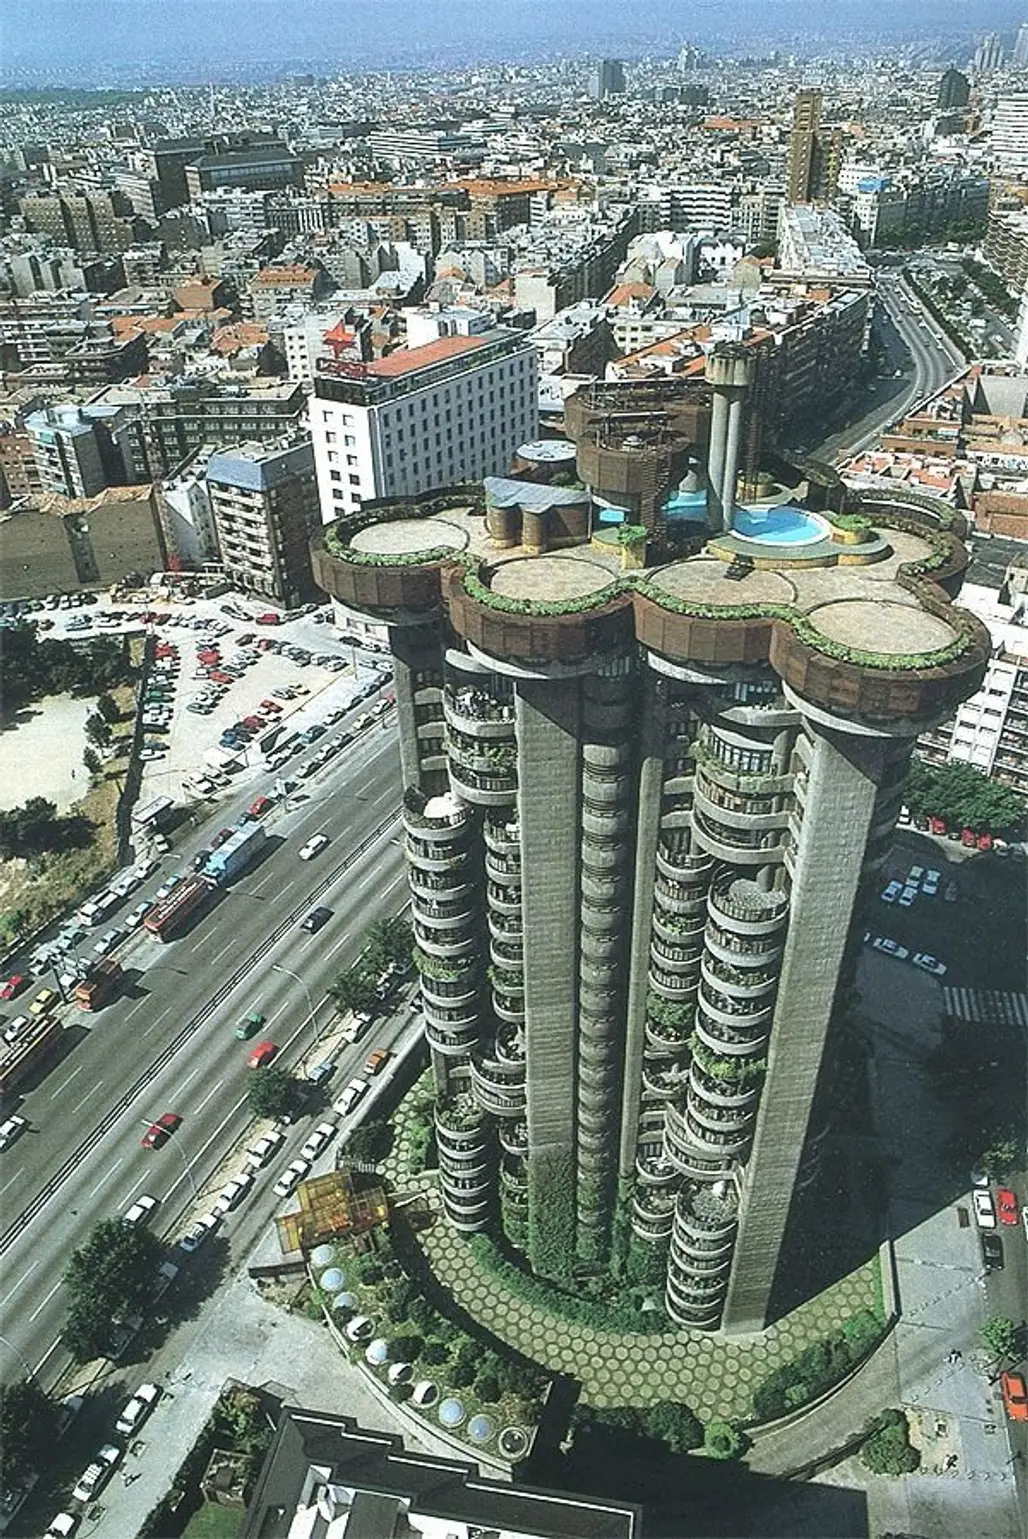 The Torre Blancas